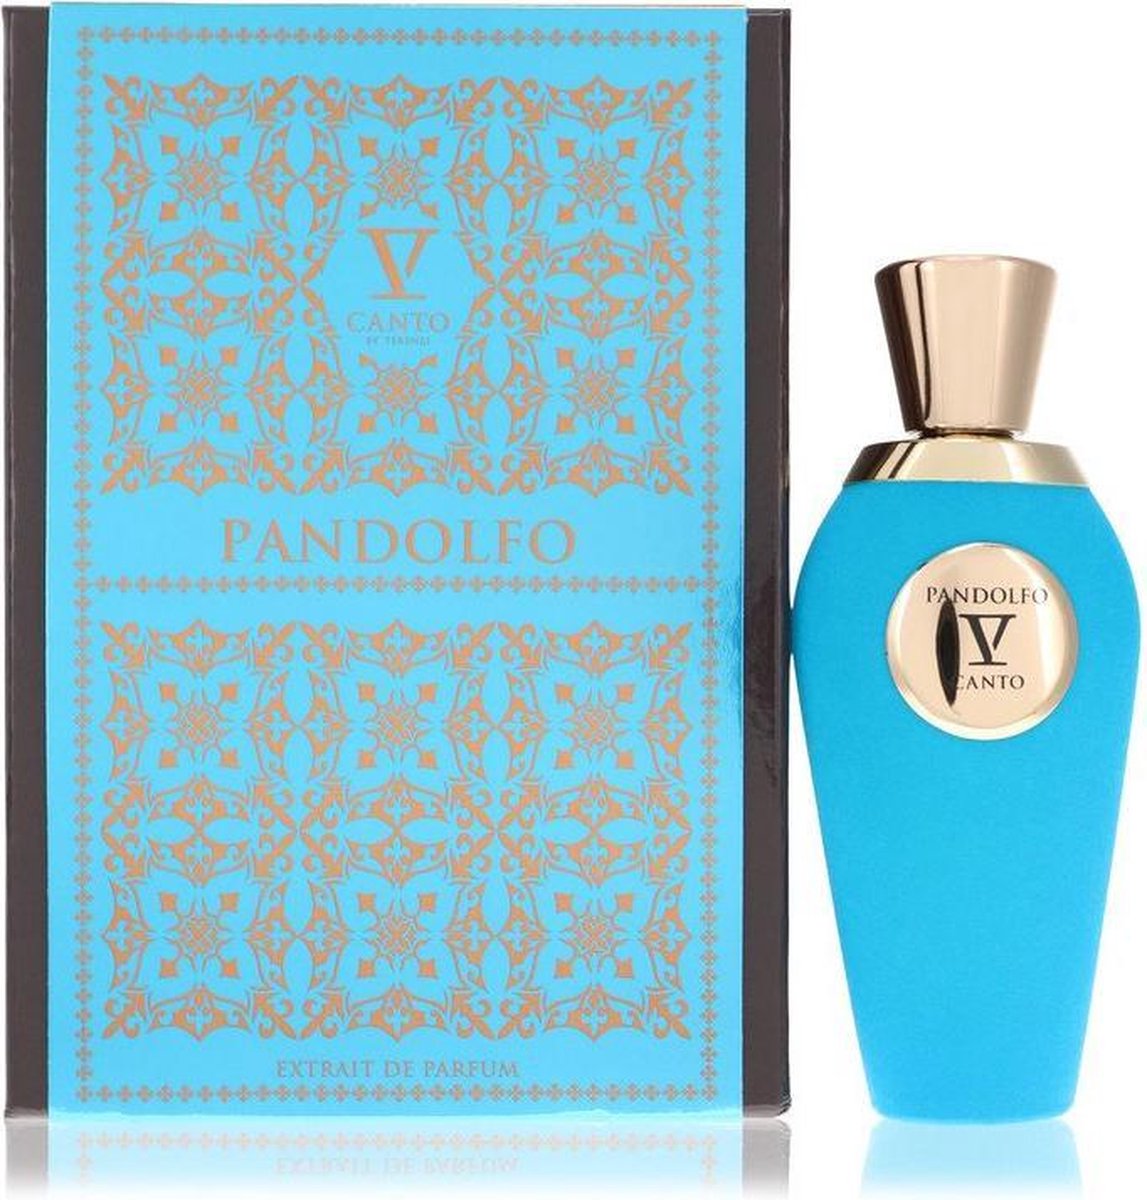 Pandolfo V by Canto 100 ml - Extrait De Parfum Spray (Unisex)